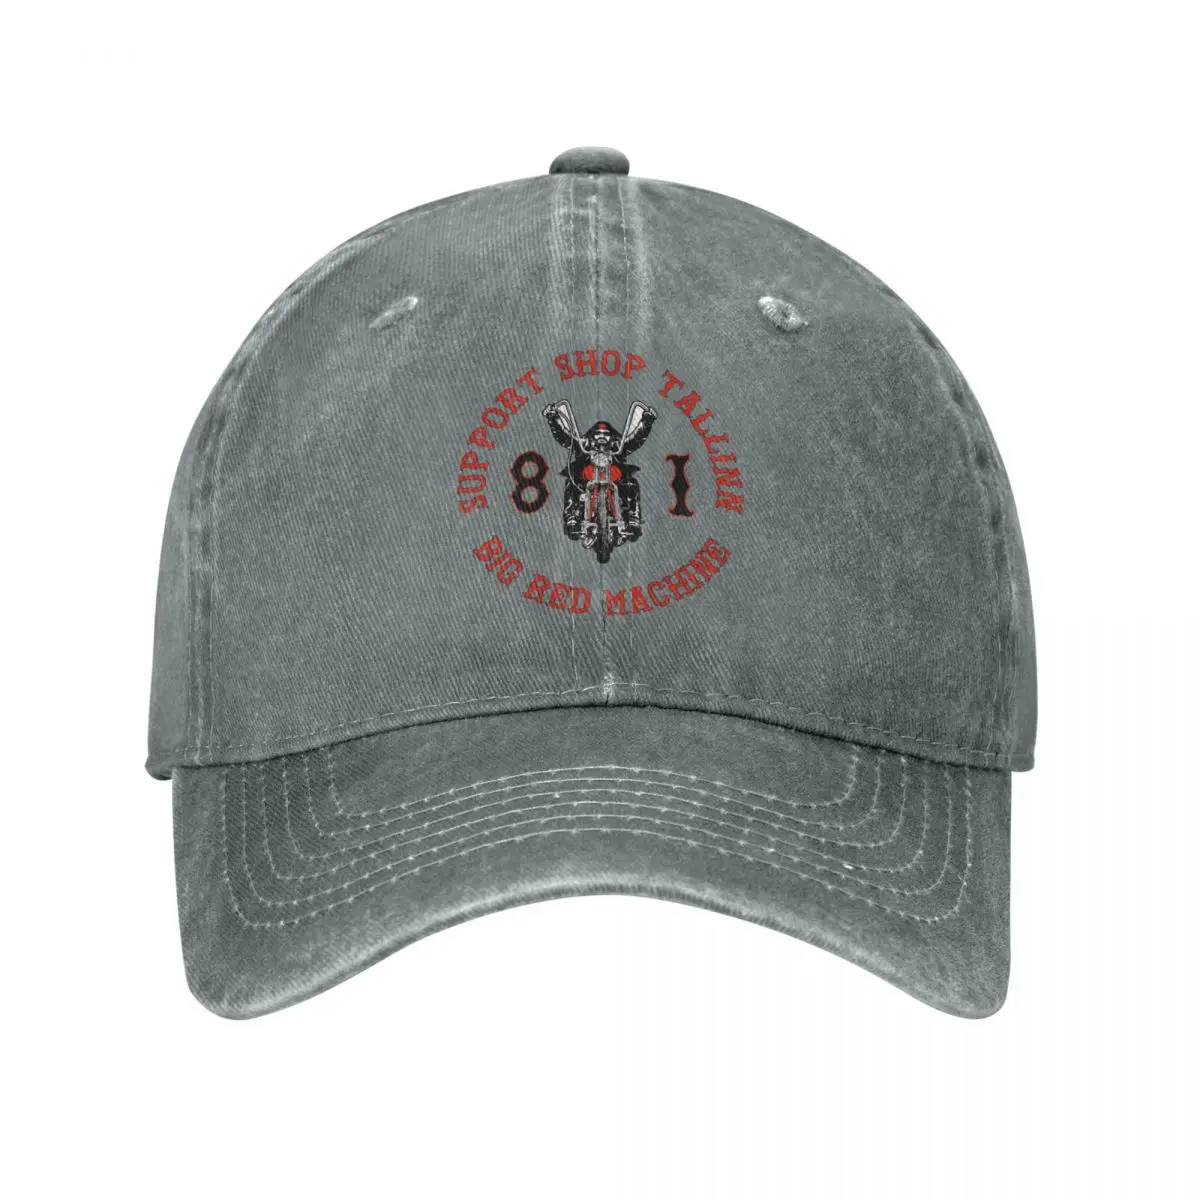 

Hells Angels Support 81 Baseball Caps Unisex Distressed Denim Snapback Hat Motorcycle Club Brotherhood Outdoor Travel Hats Cap